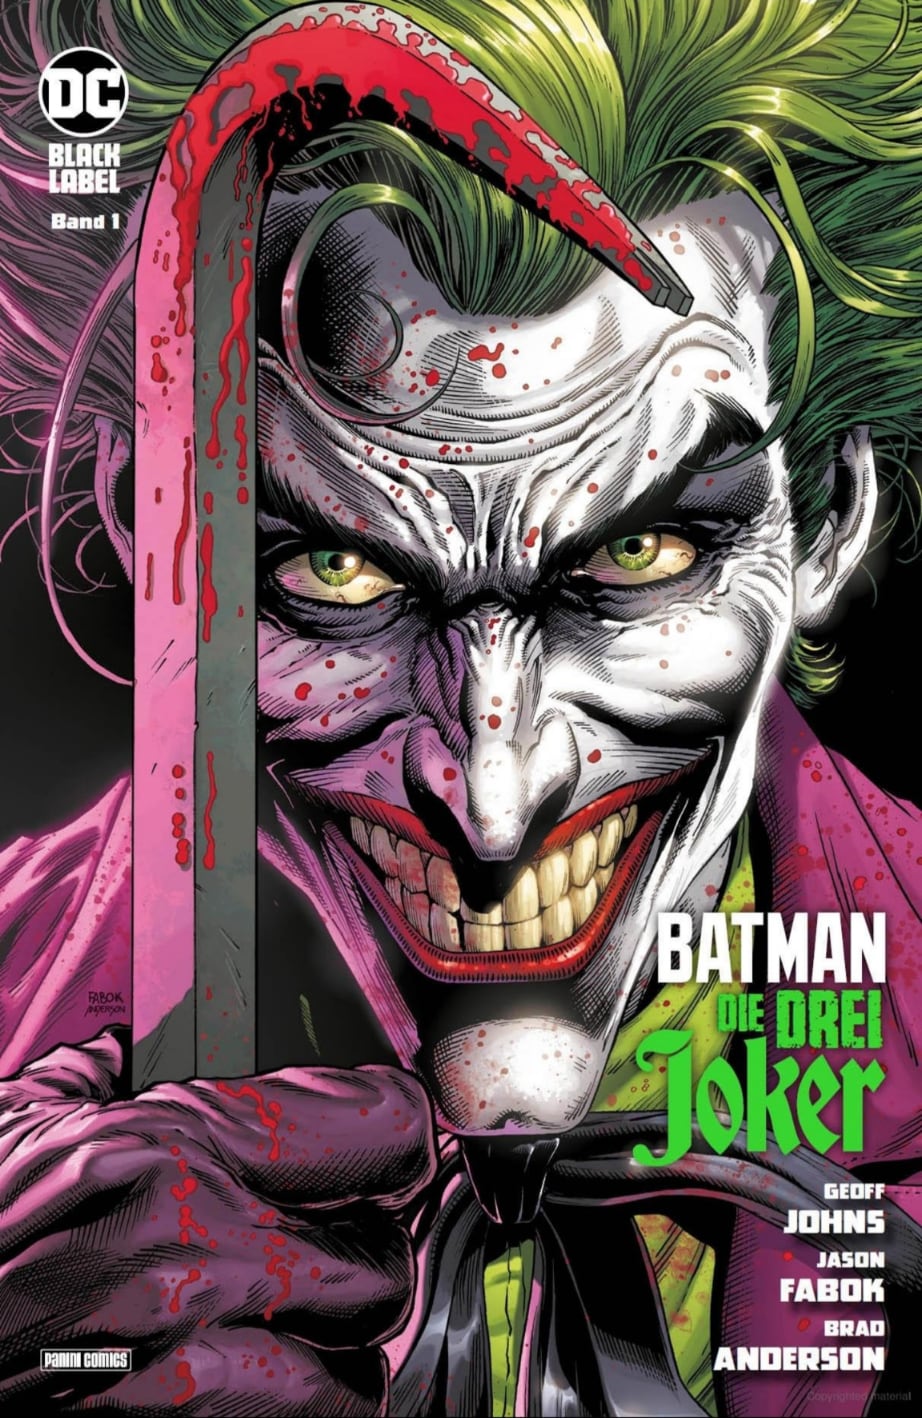 COMIC-REVIEW: BATMAN – DIE DREI JOKER (COLLECTOR EDITION)